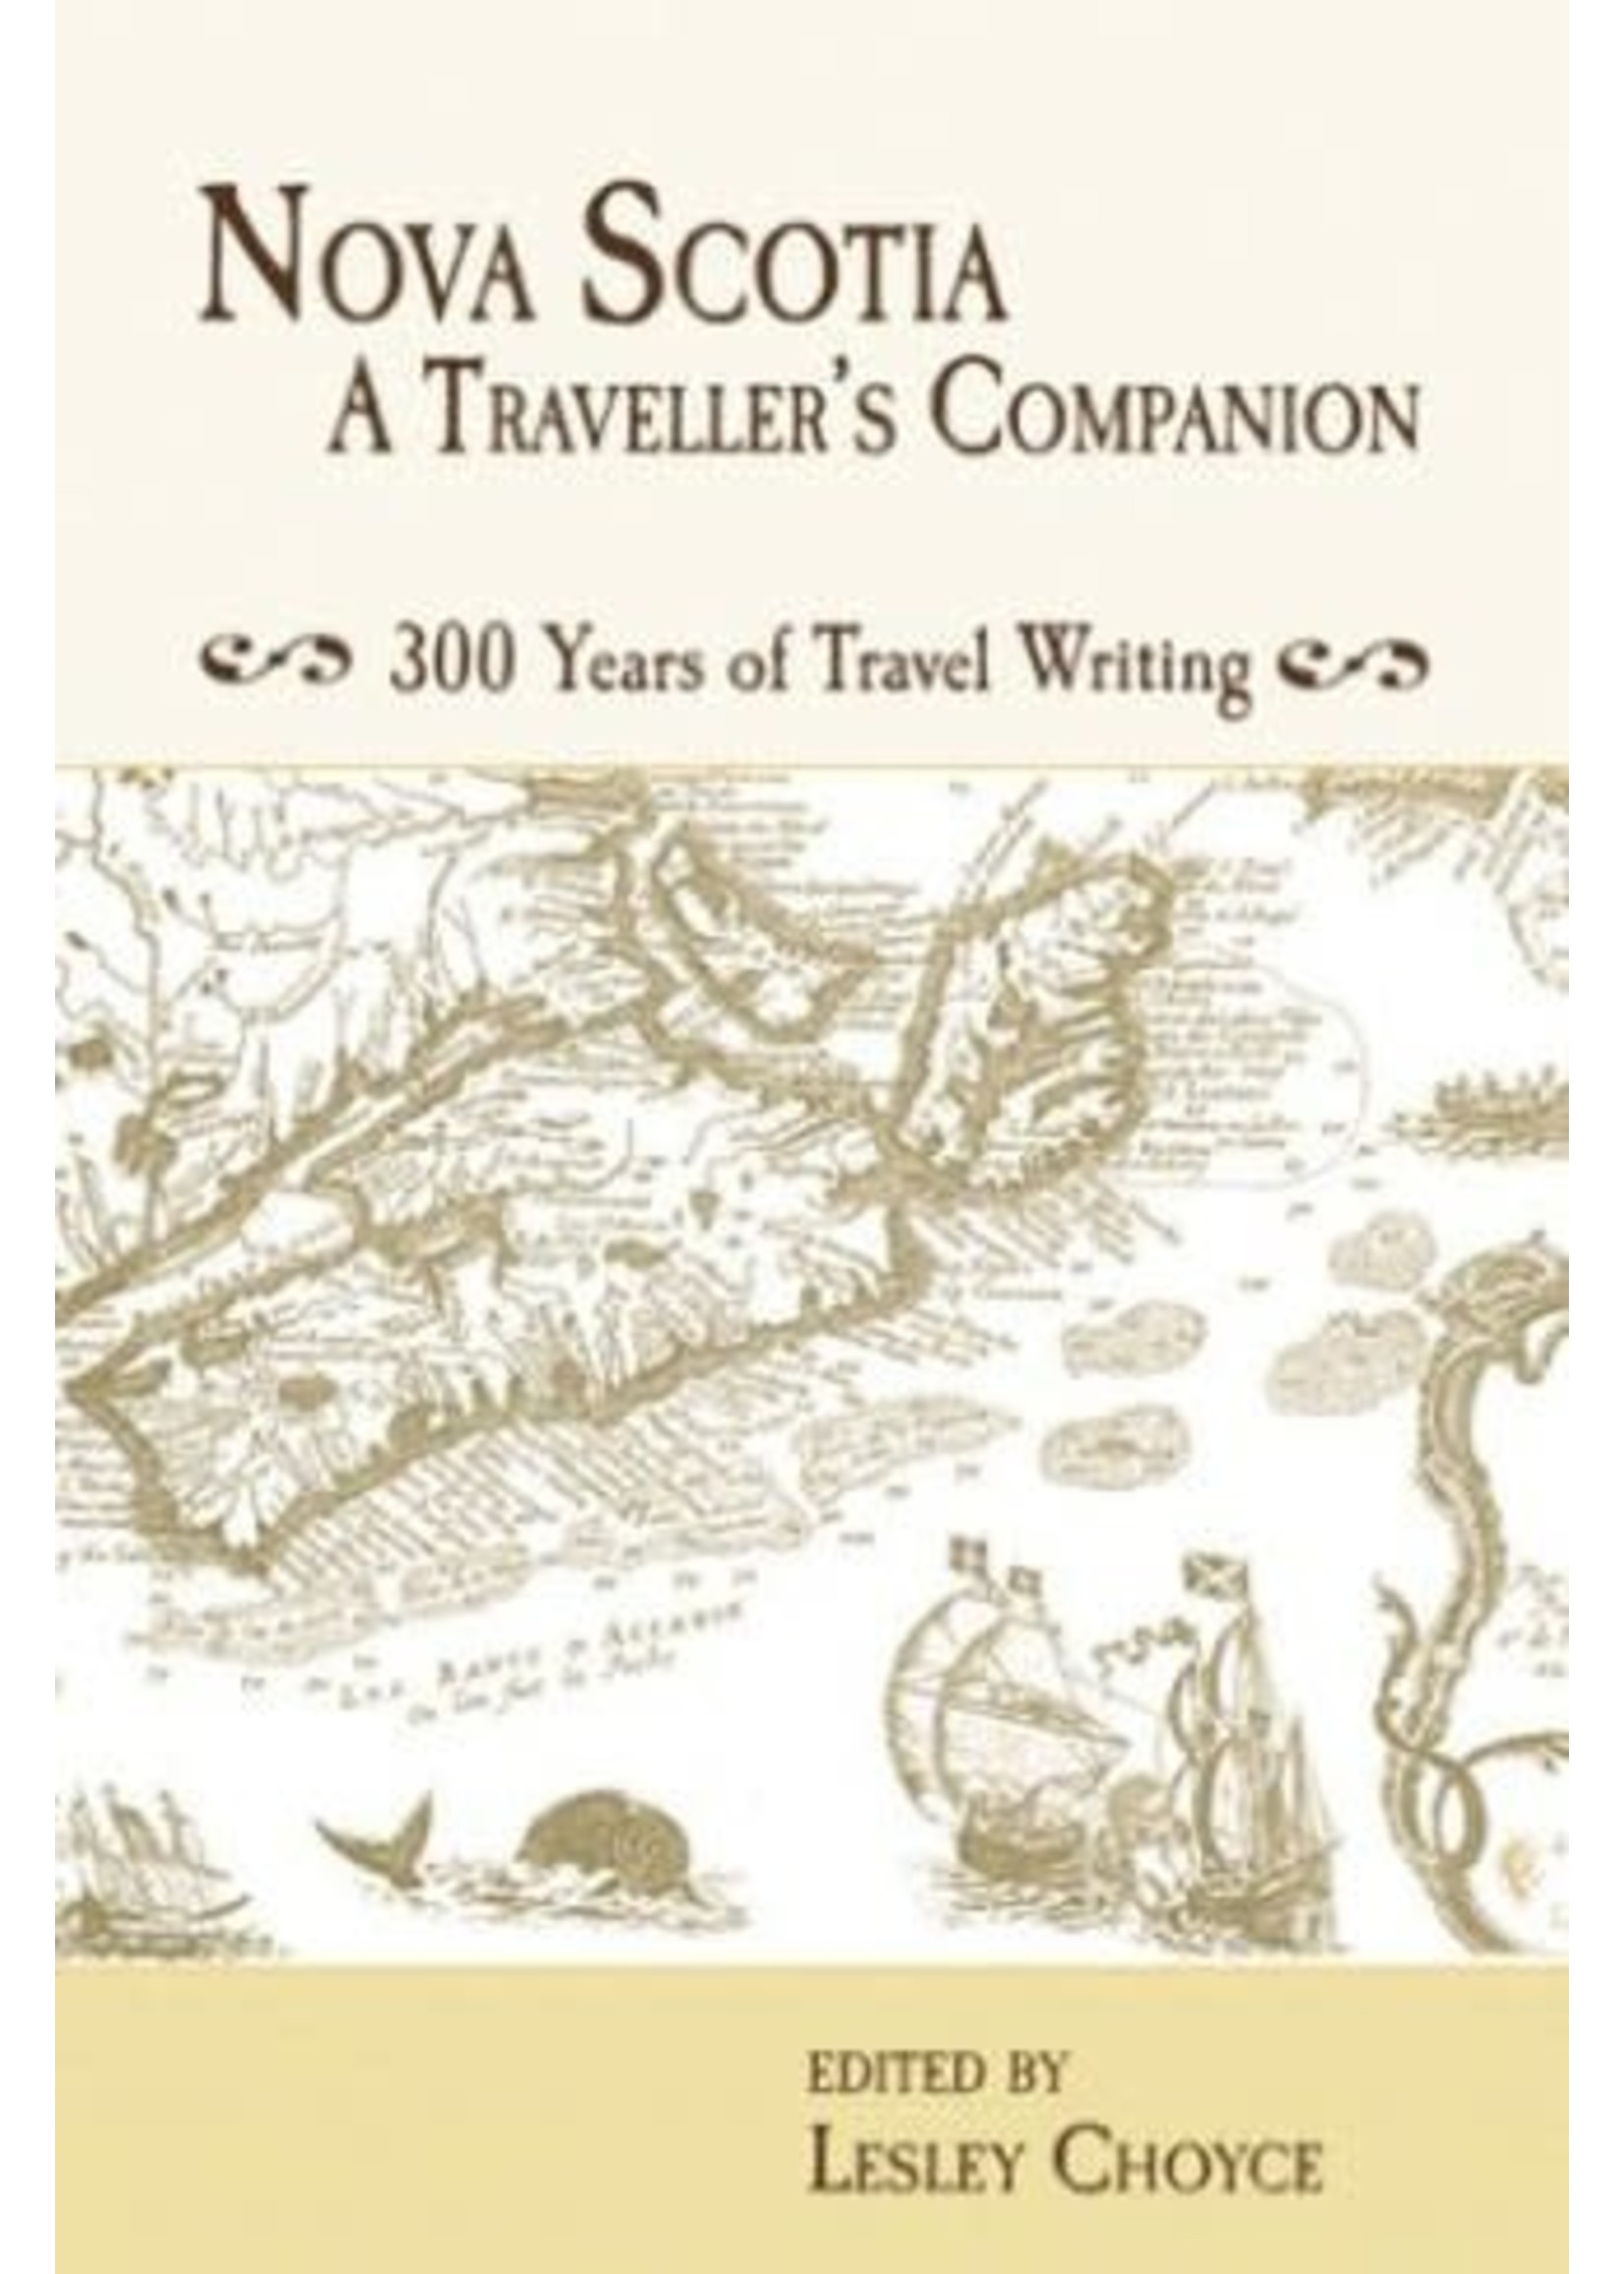 Nova Scotia: A Traveller’s Companion by Lesley Choyce